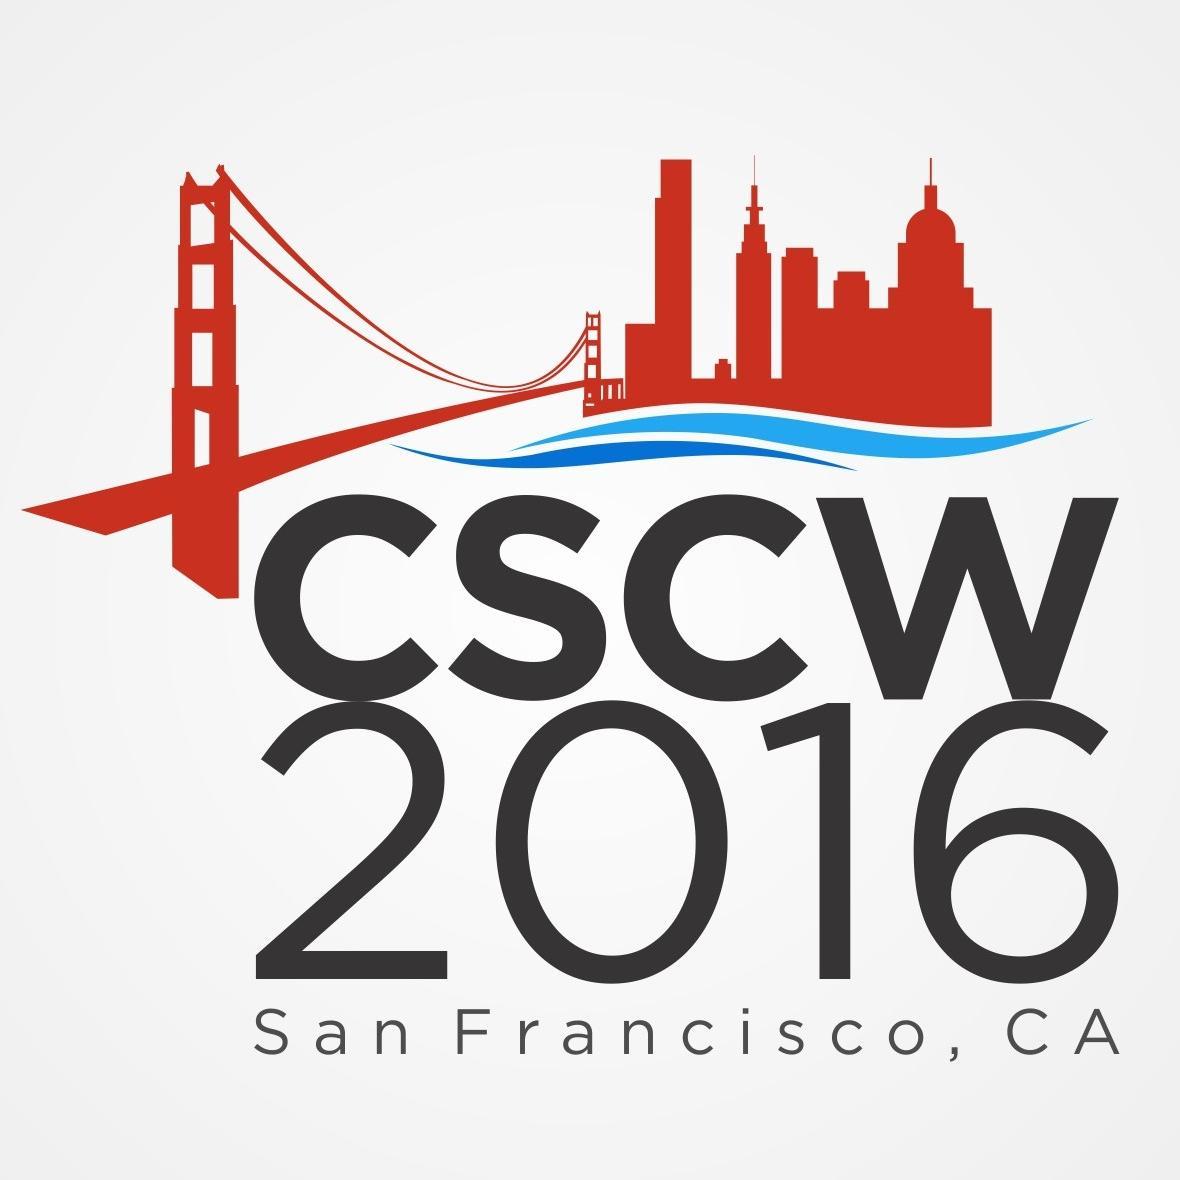 CSCW event logo